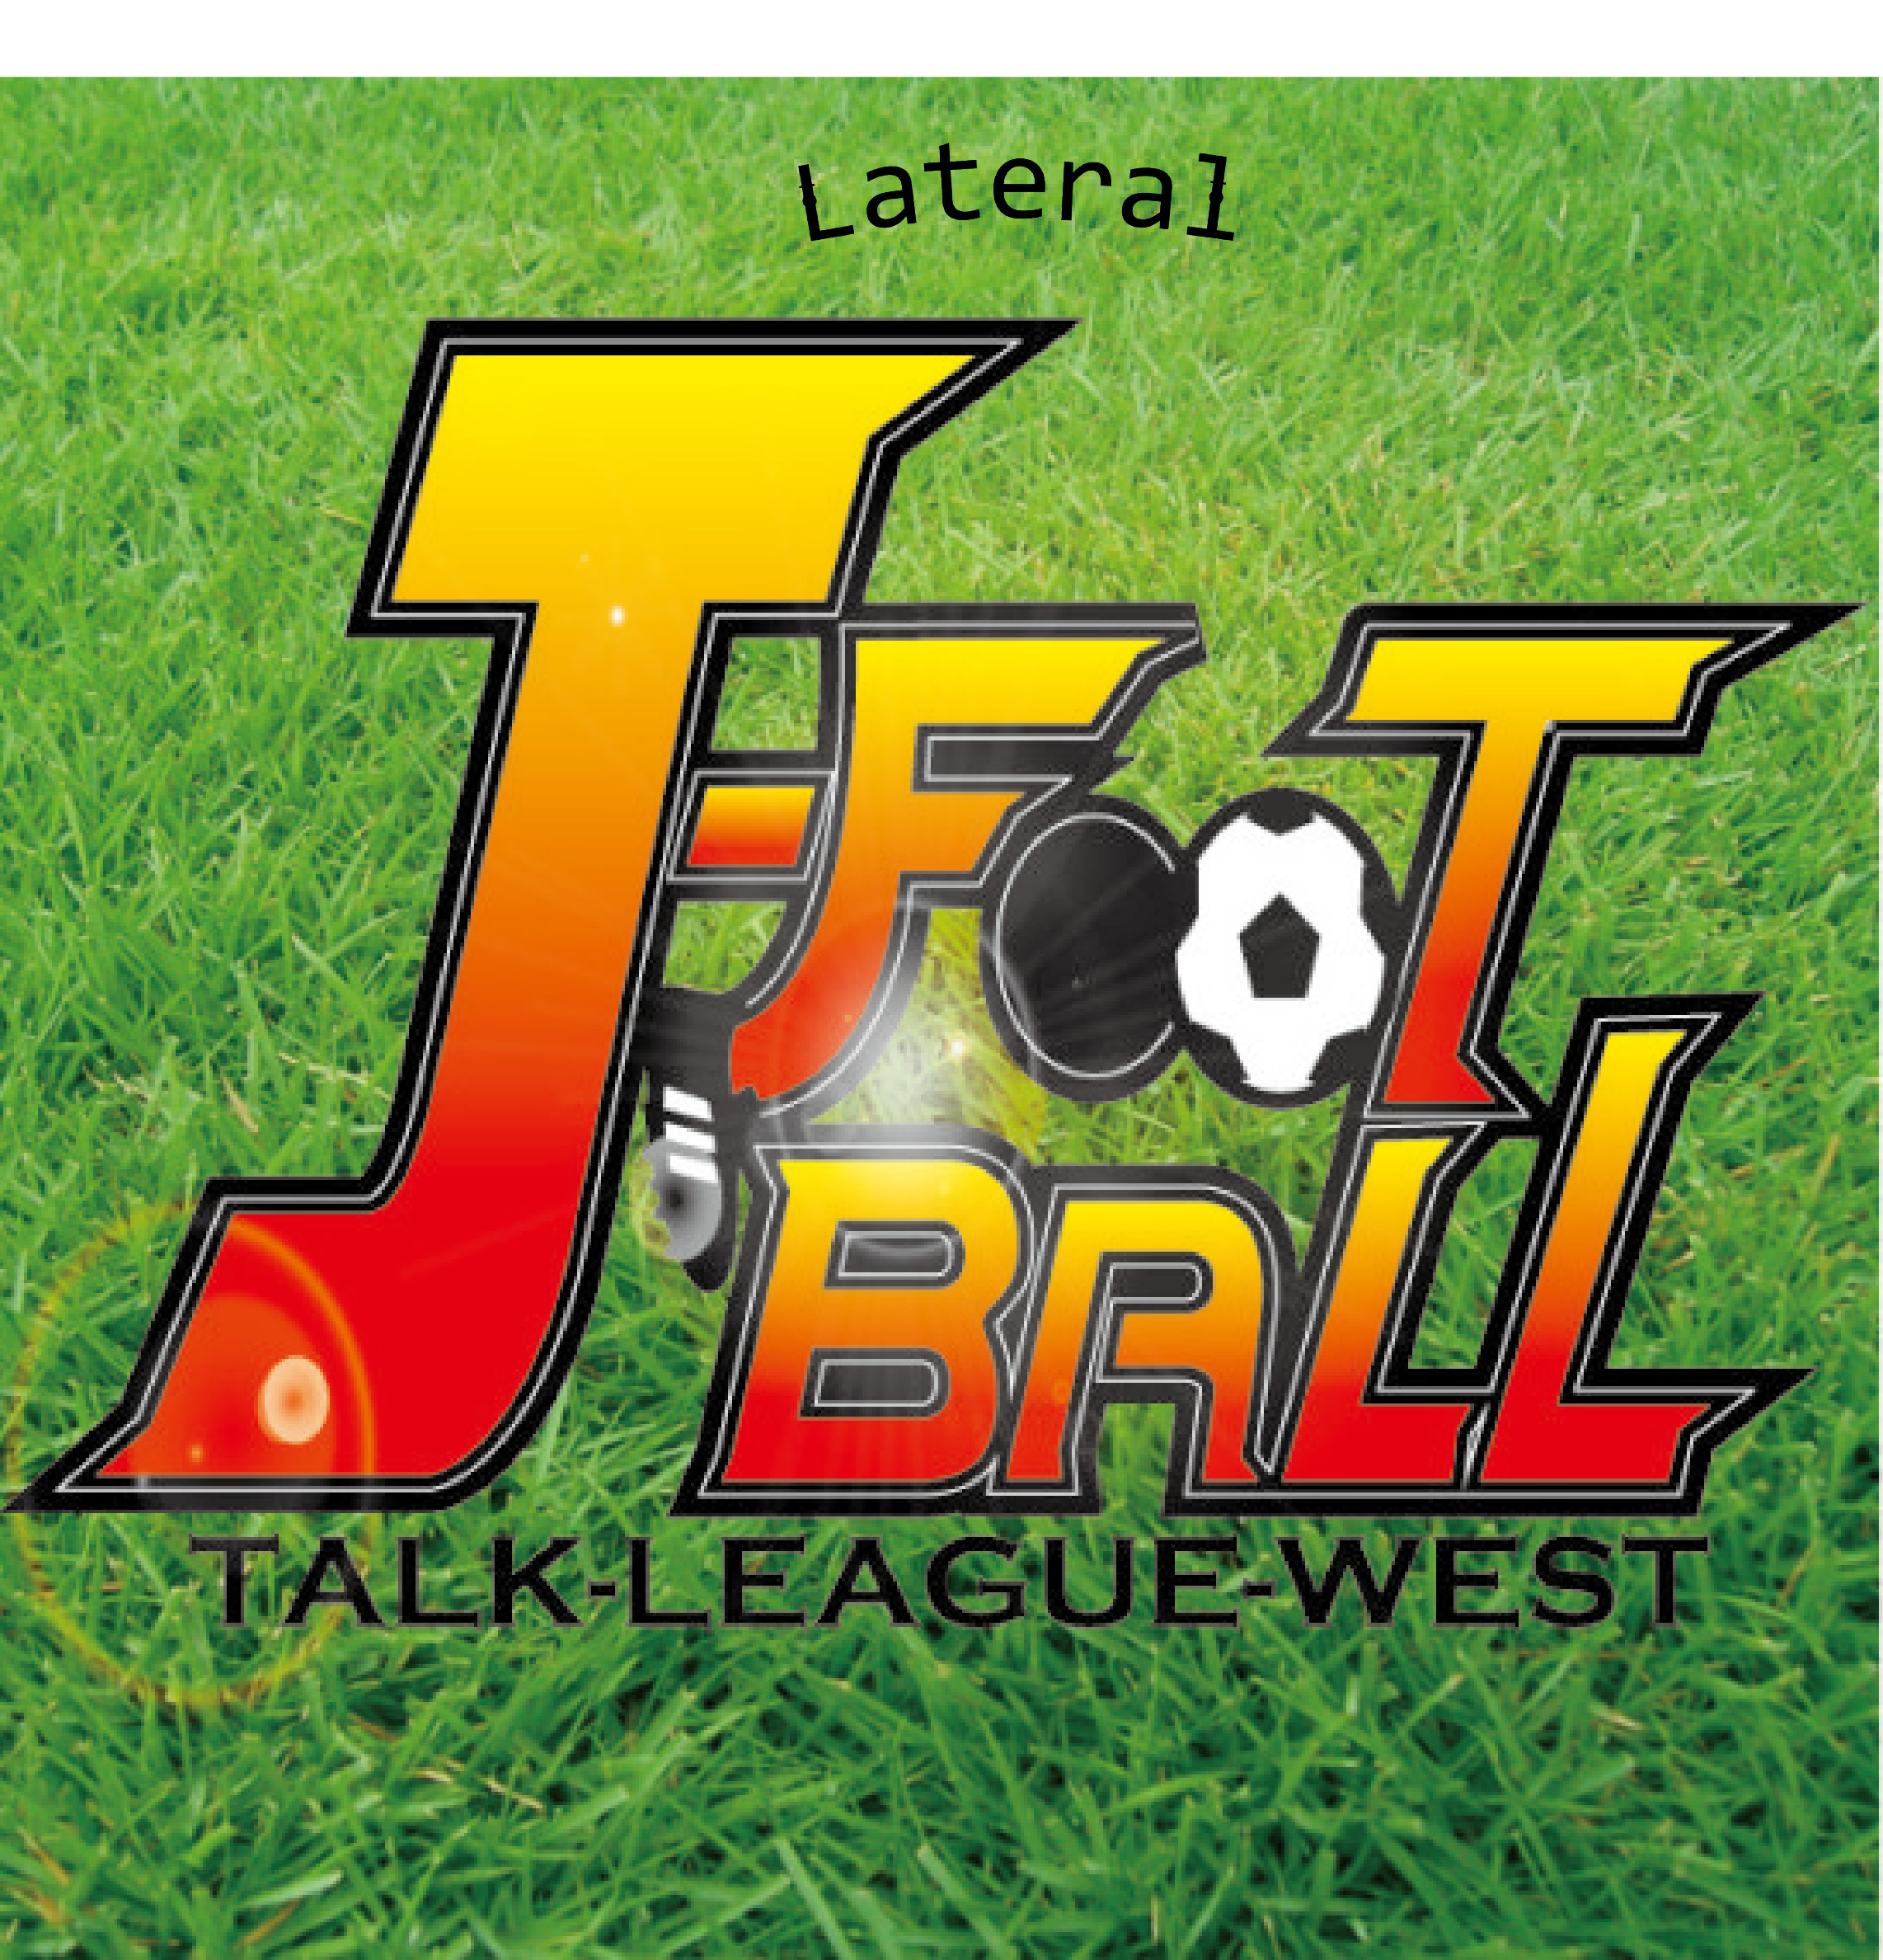 『J-FOOTBALL TALK-LEAGUE-WEST Vol.20』